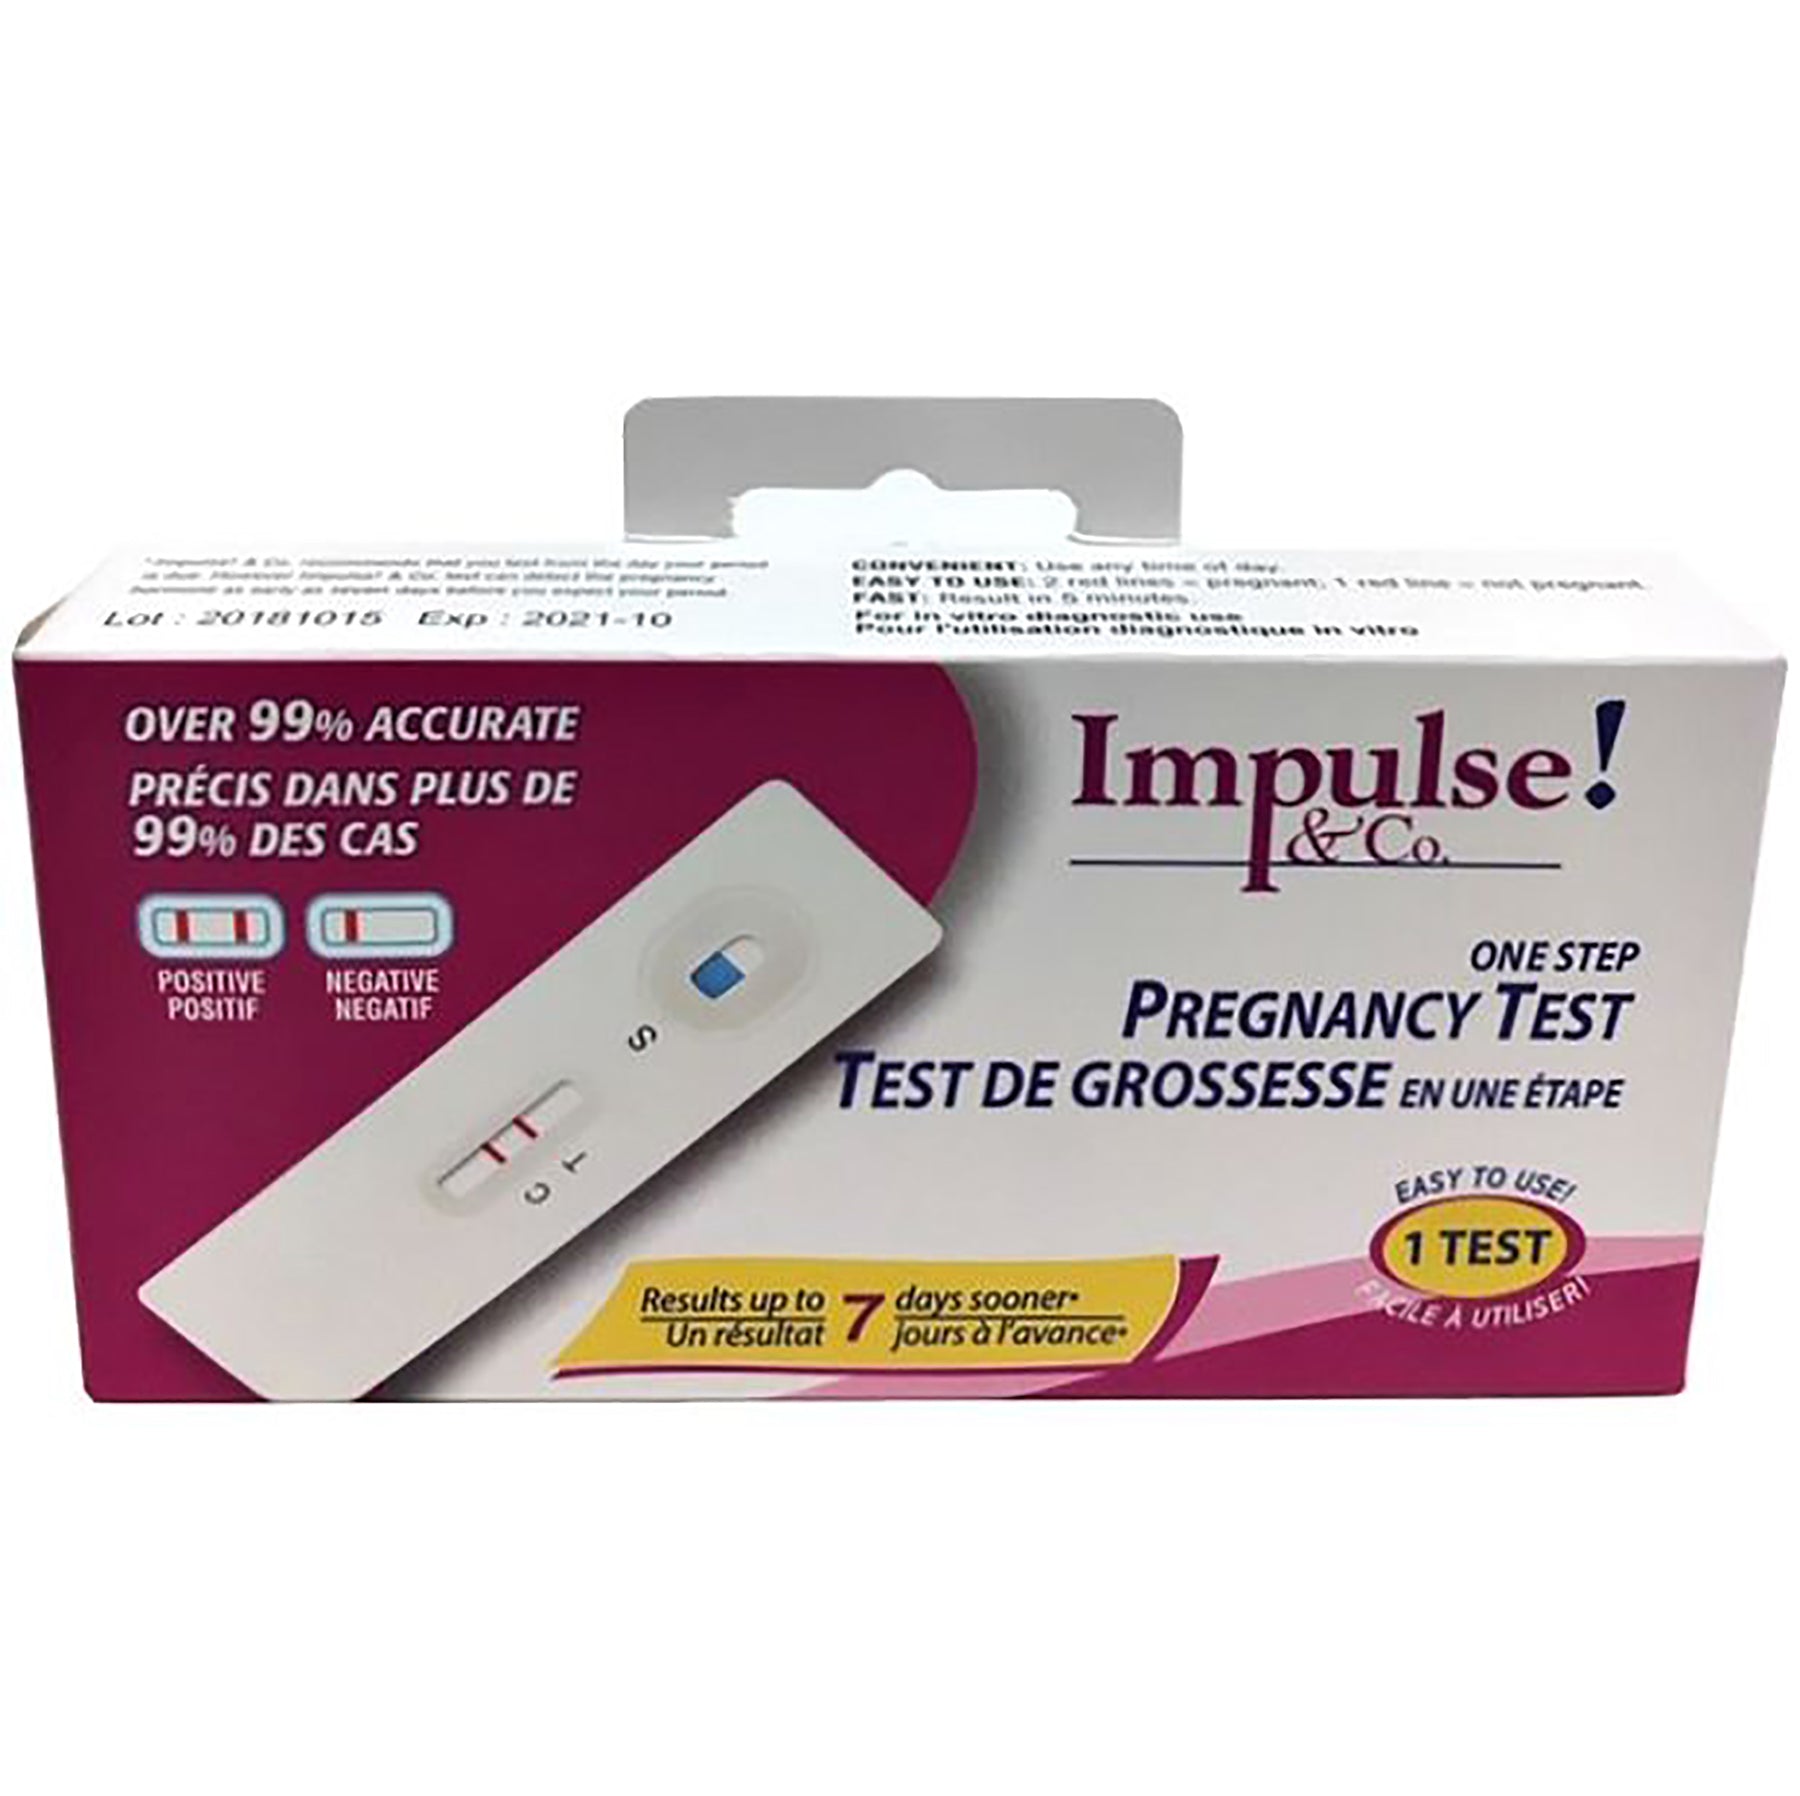 Impulse & co. One step Pregnancy Test